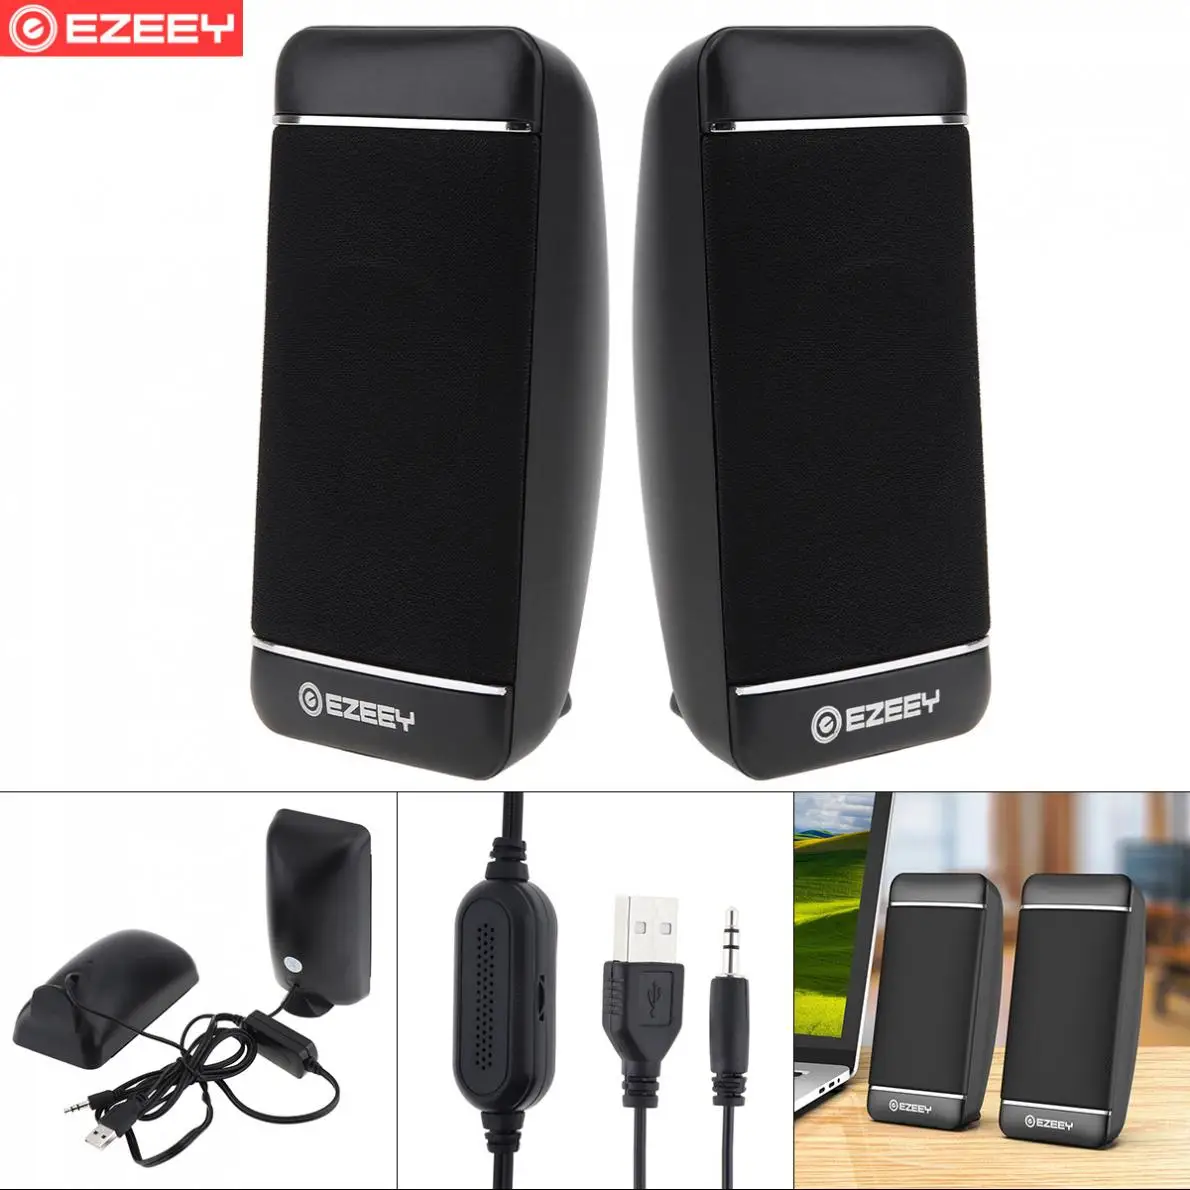 EZEEY S4 мини USB 5V сабвуфер Динамик с 3,5 мм аудио разъем и объем Управление для ноутбука телефон